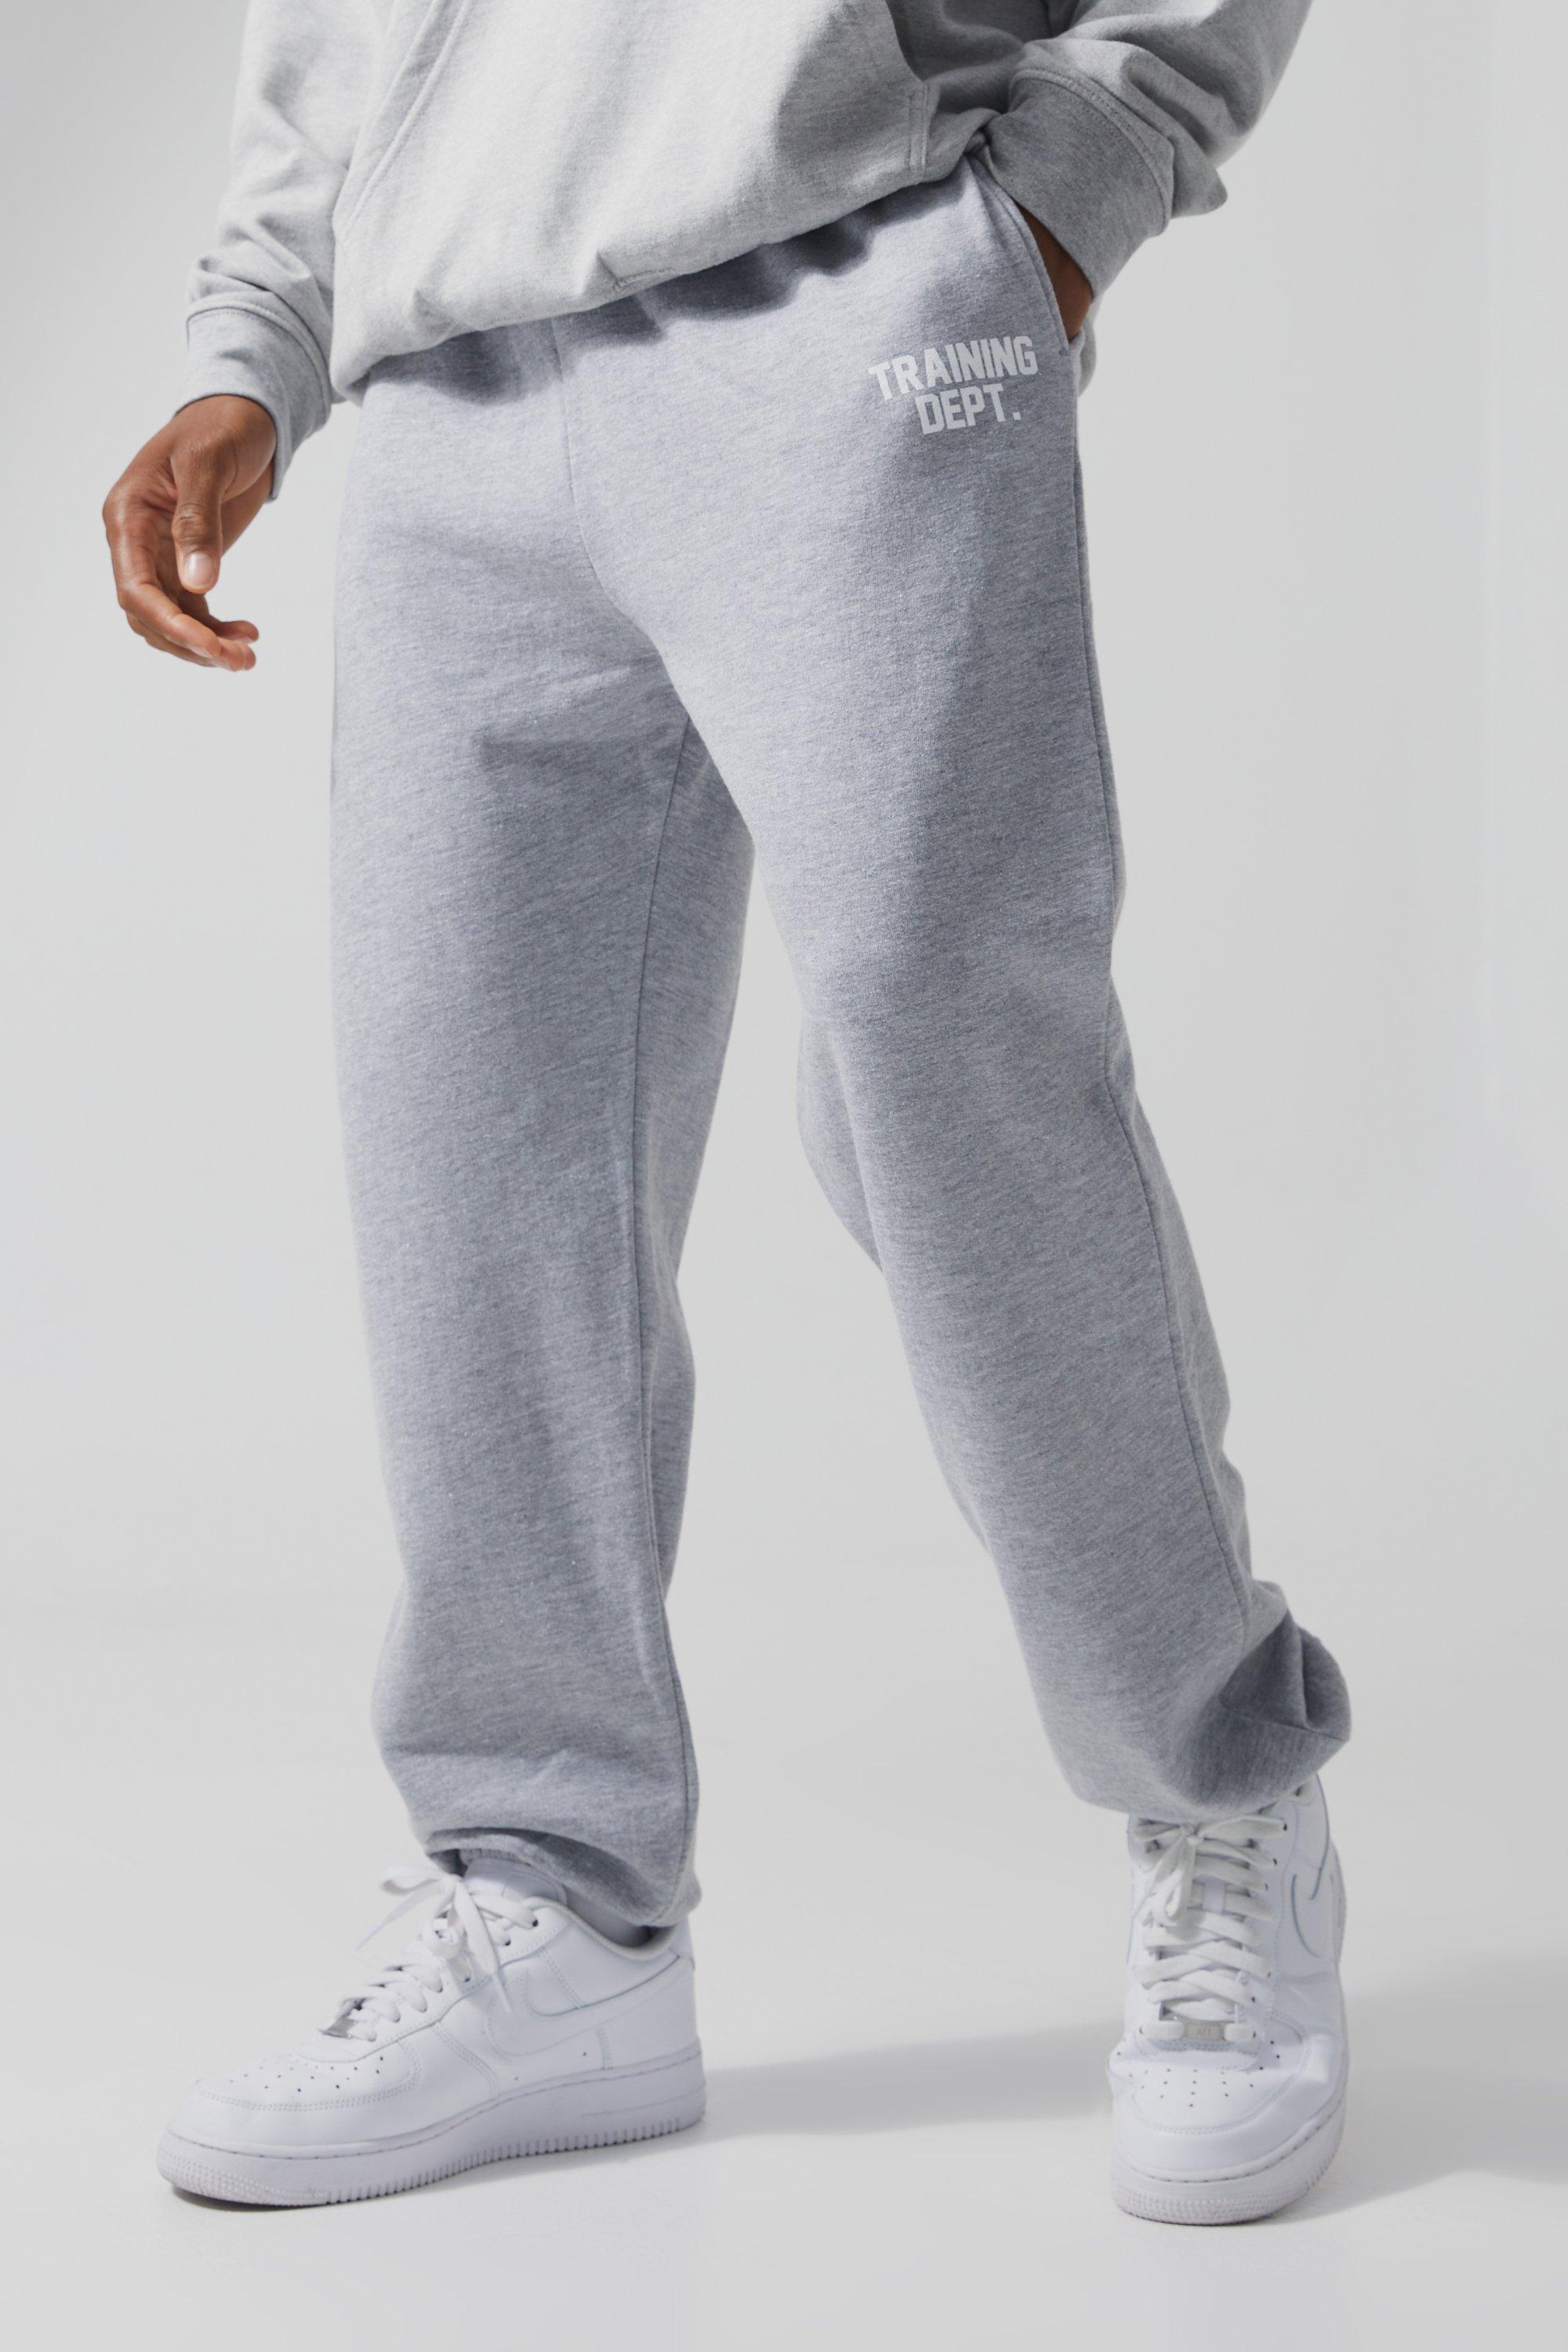 Image of Pantaloni tuta oversize Man Active Training Dept, Grigio